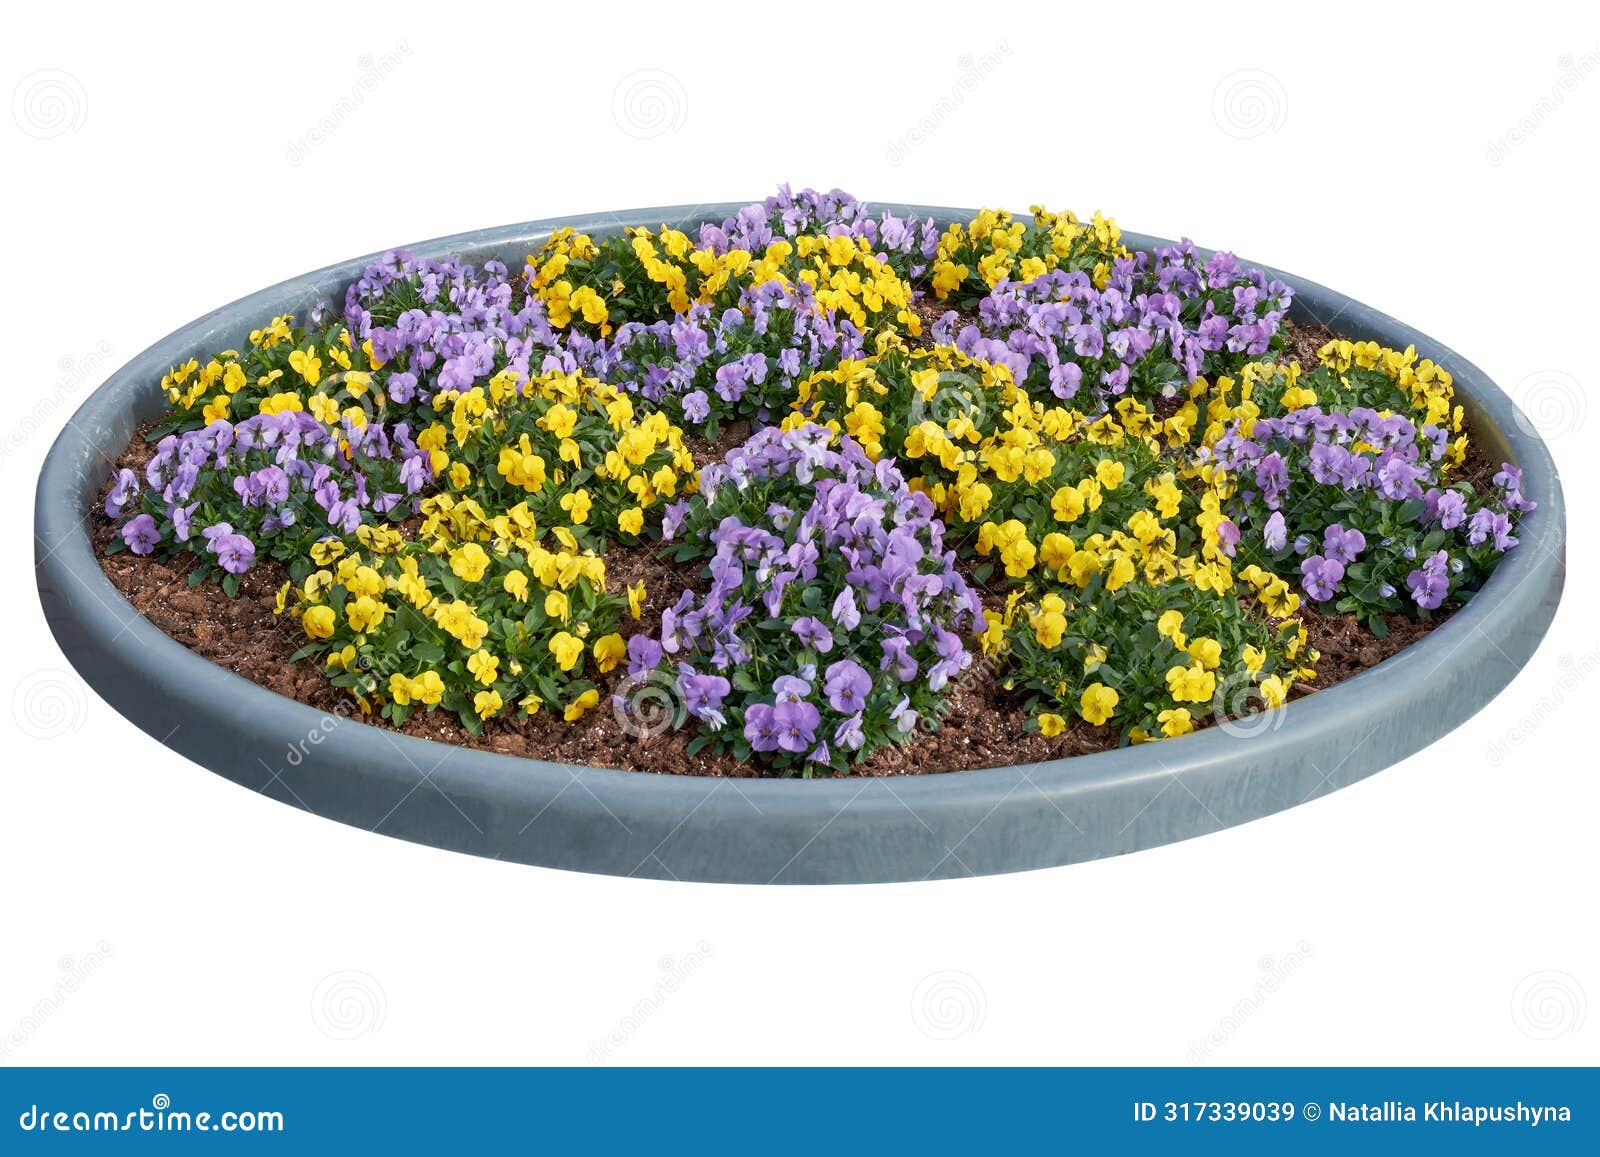 beautiful pansies, violets, violas growing on the flowerbed. violet tricolor spring flowers on flowerbed,  on white